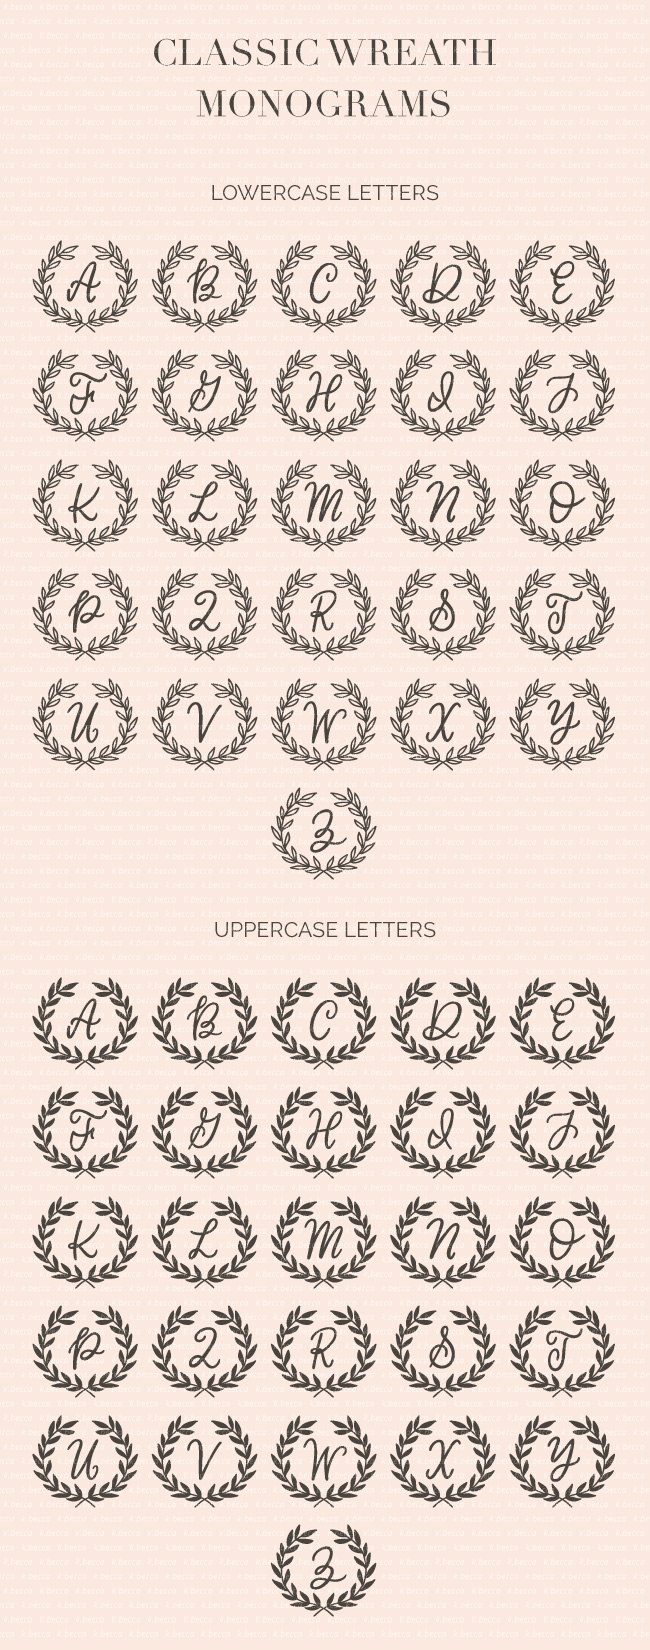 Classic Wreath Monograms Dingbat Font from k.becca #font